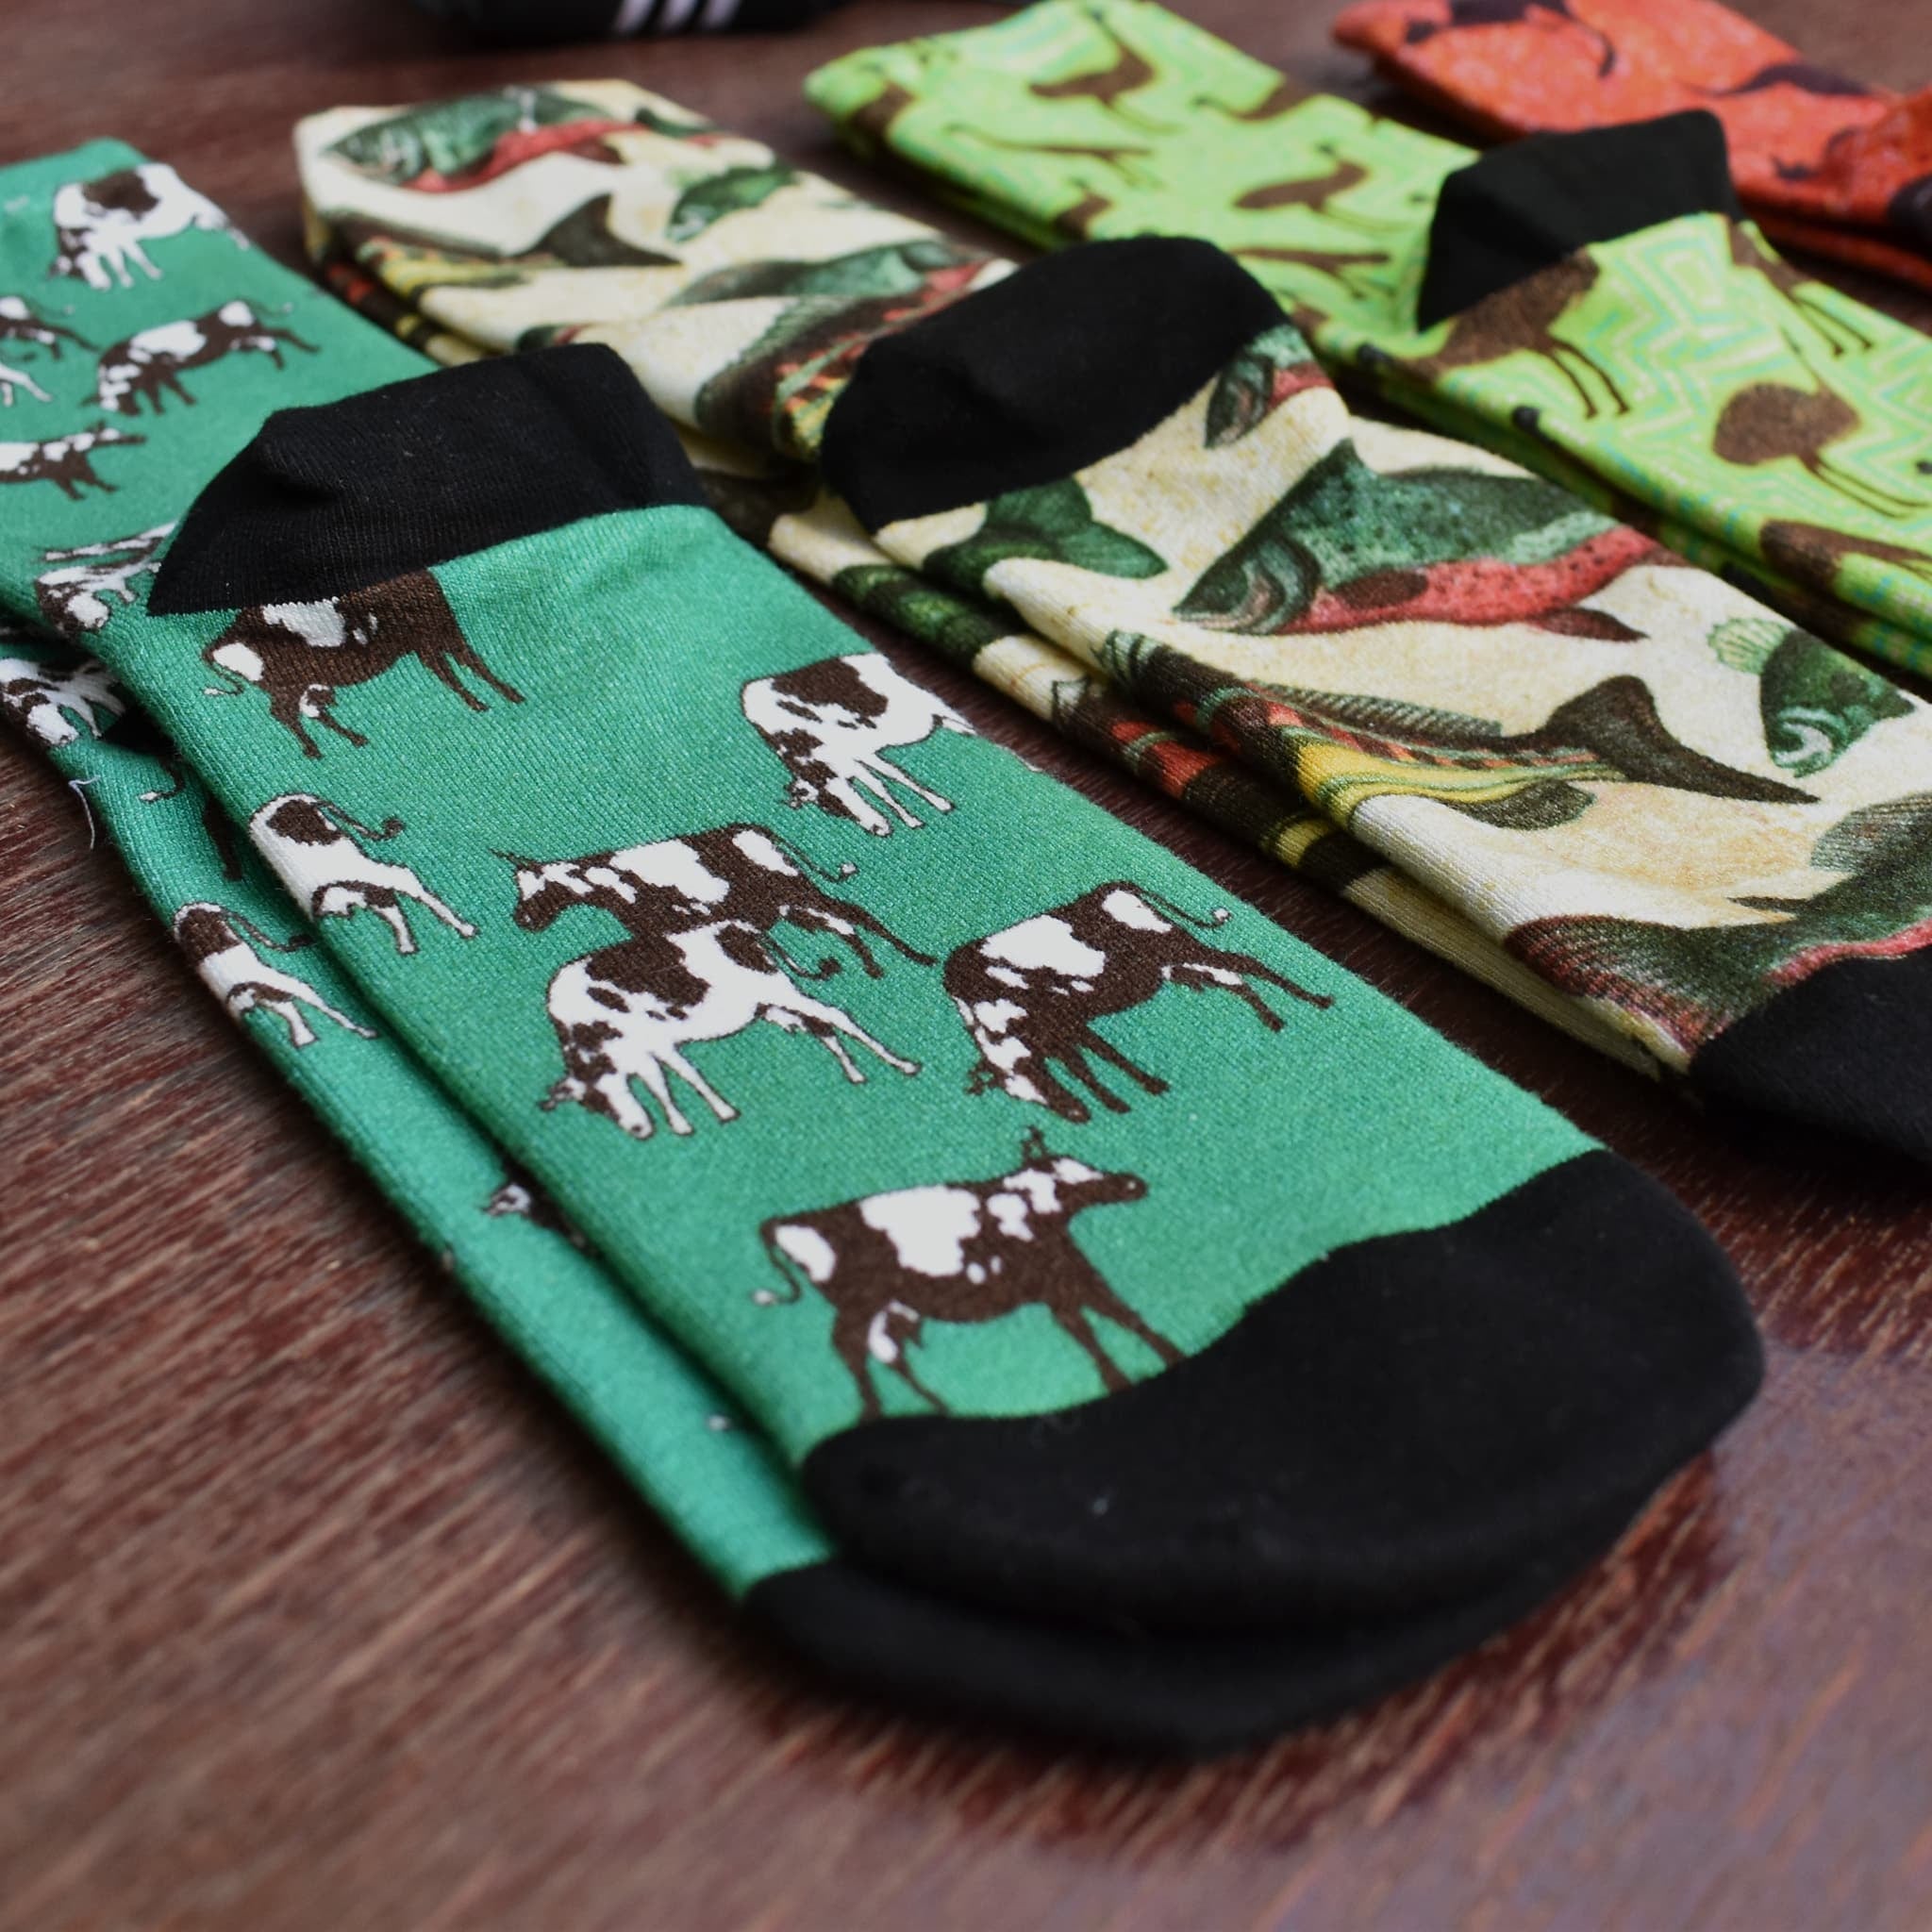 Patterned socks, cows, fish, emu and kangaroo